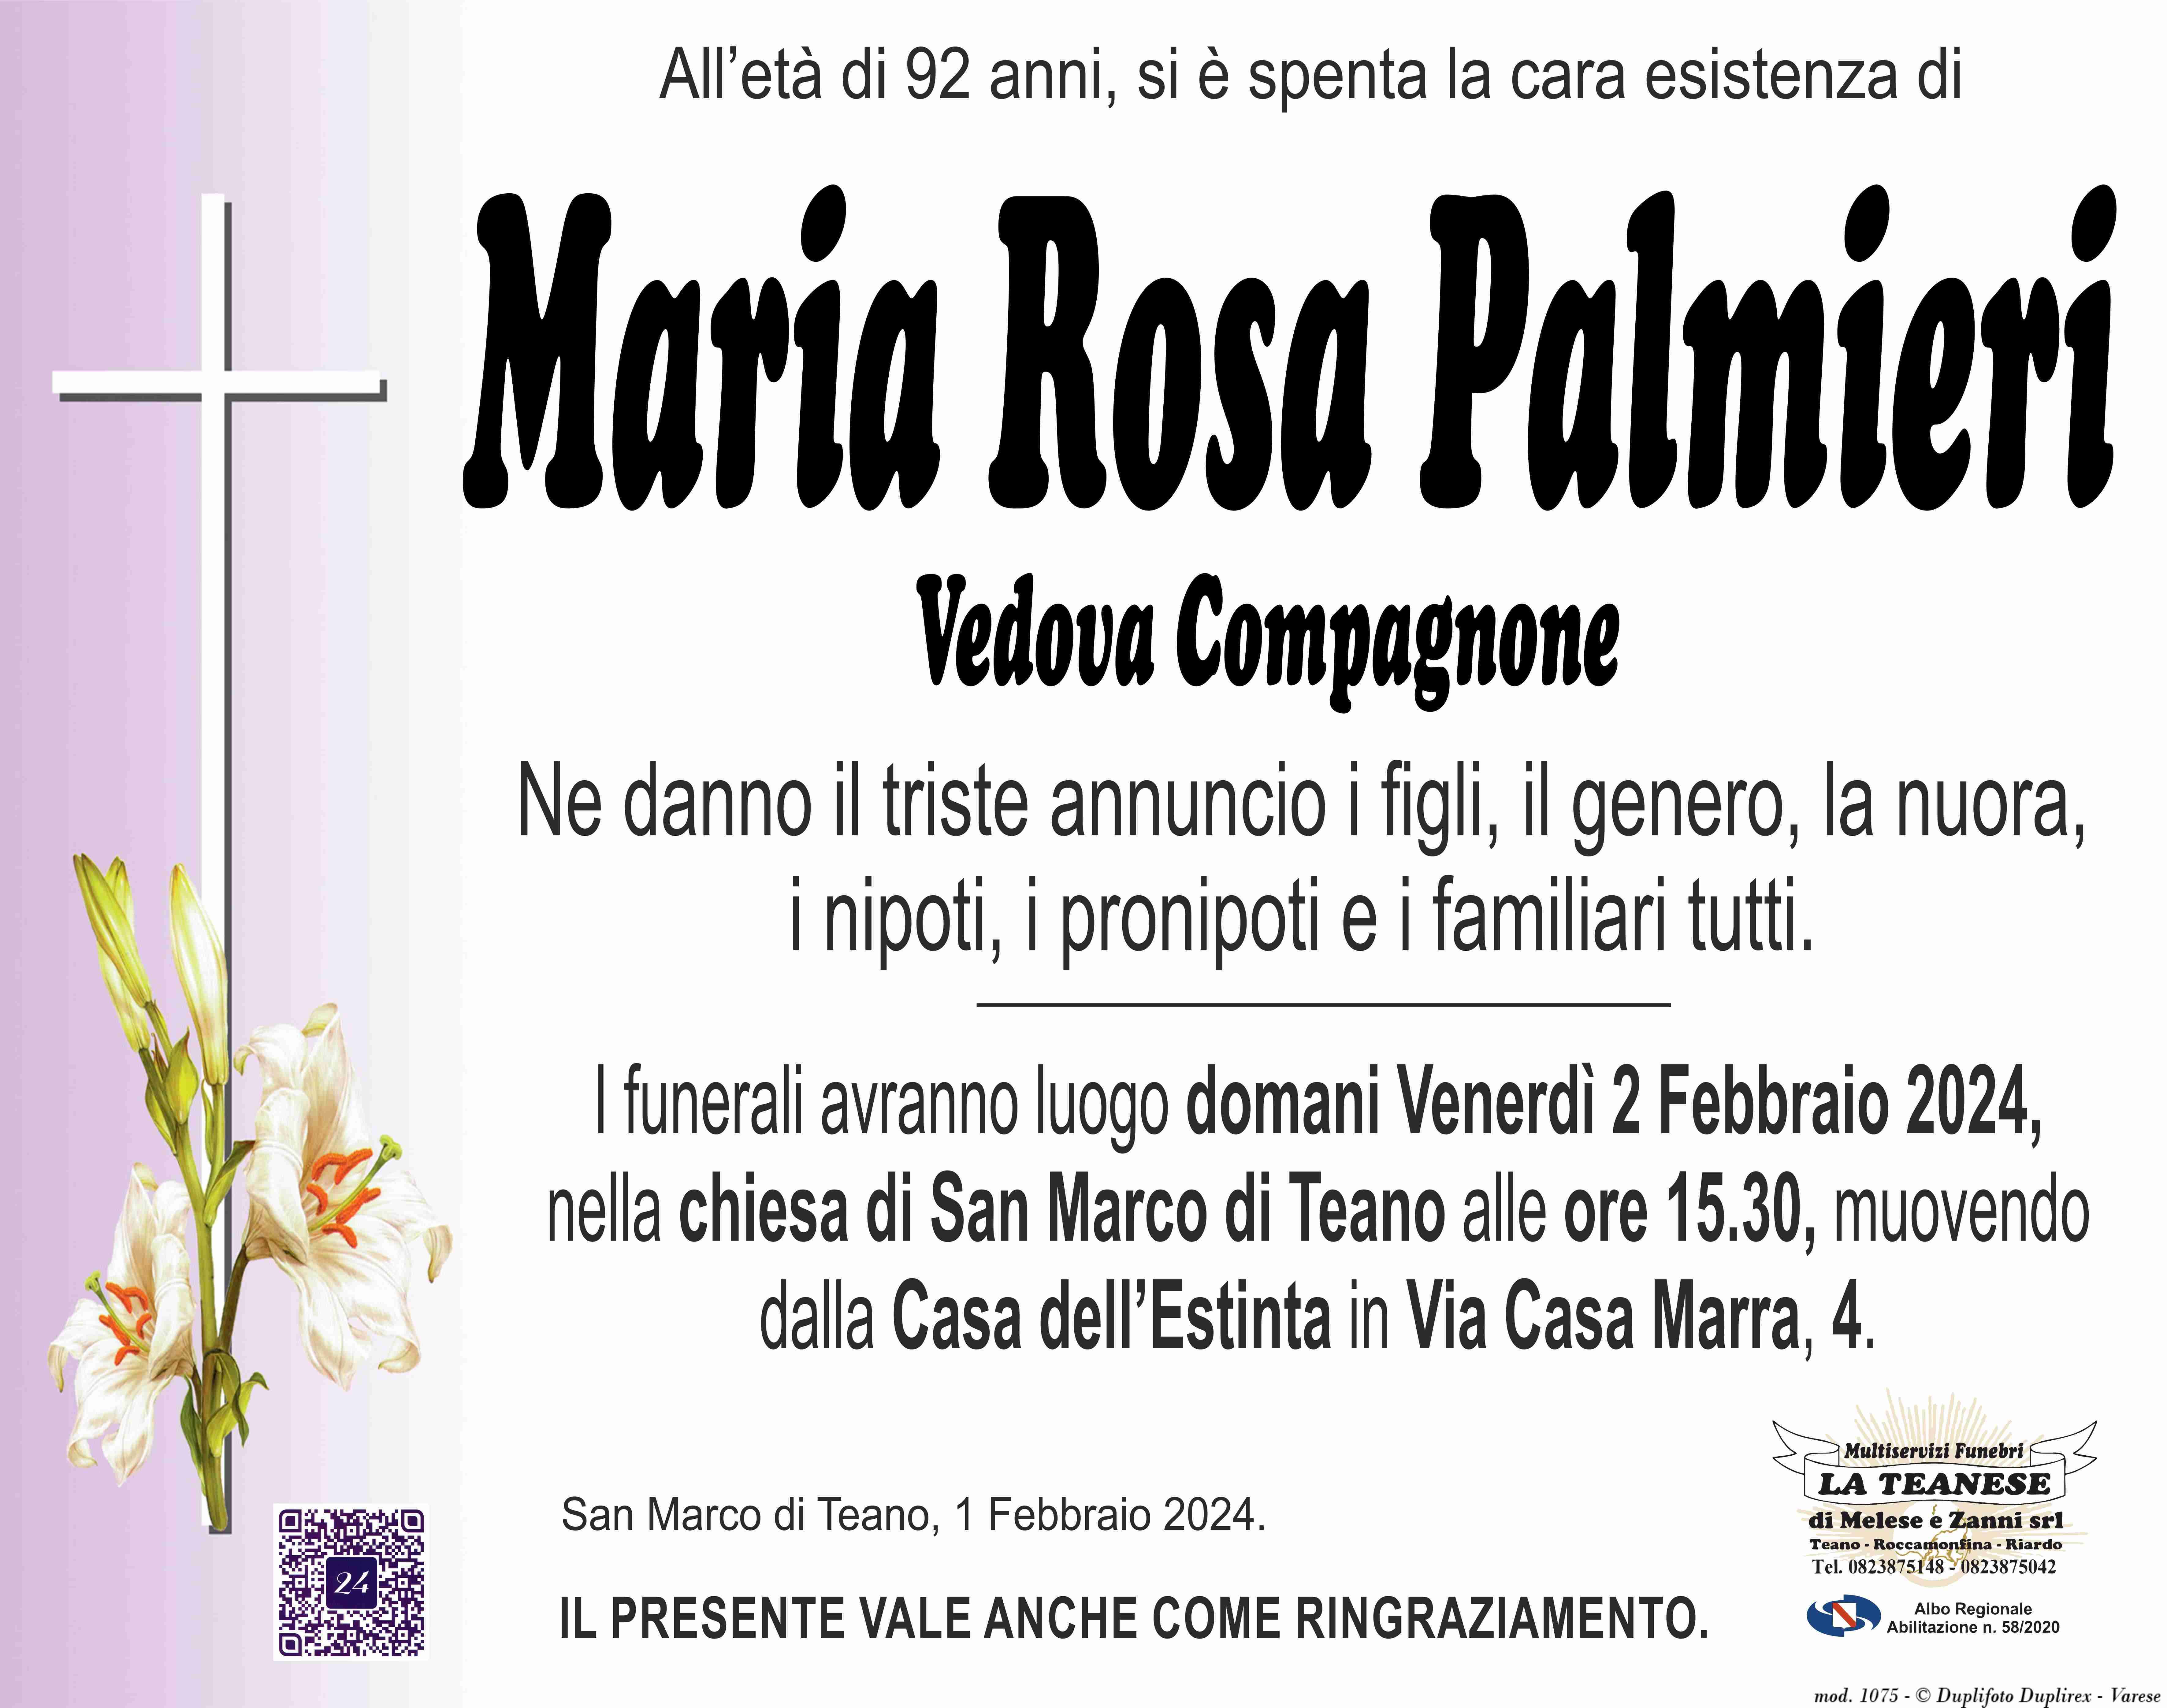 Maria Rosa Palmieri